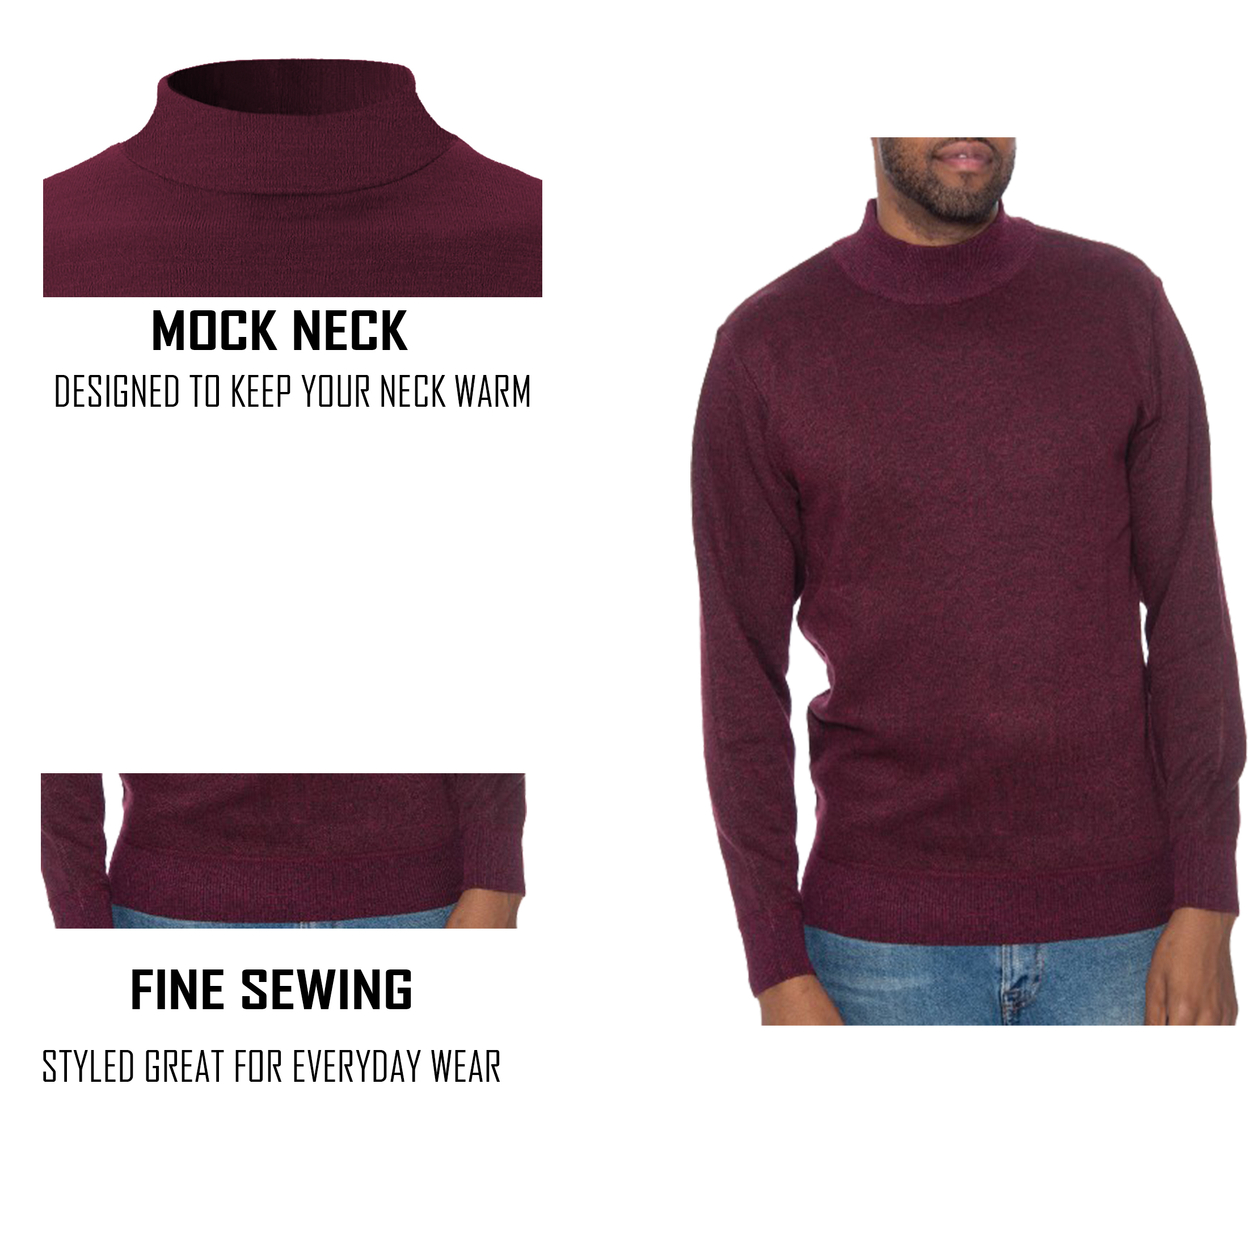 2-Pack: Men's Winter Warm Cozy Knit Slim Fit Mock Neck Sweater - Black& Burgundy, Small